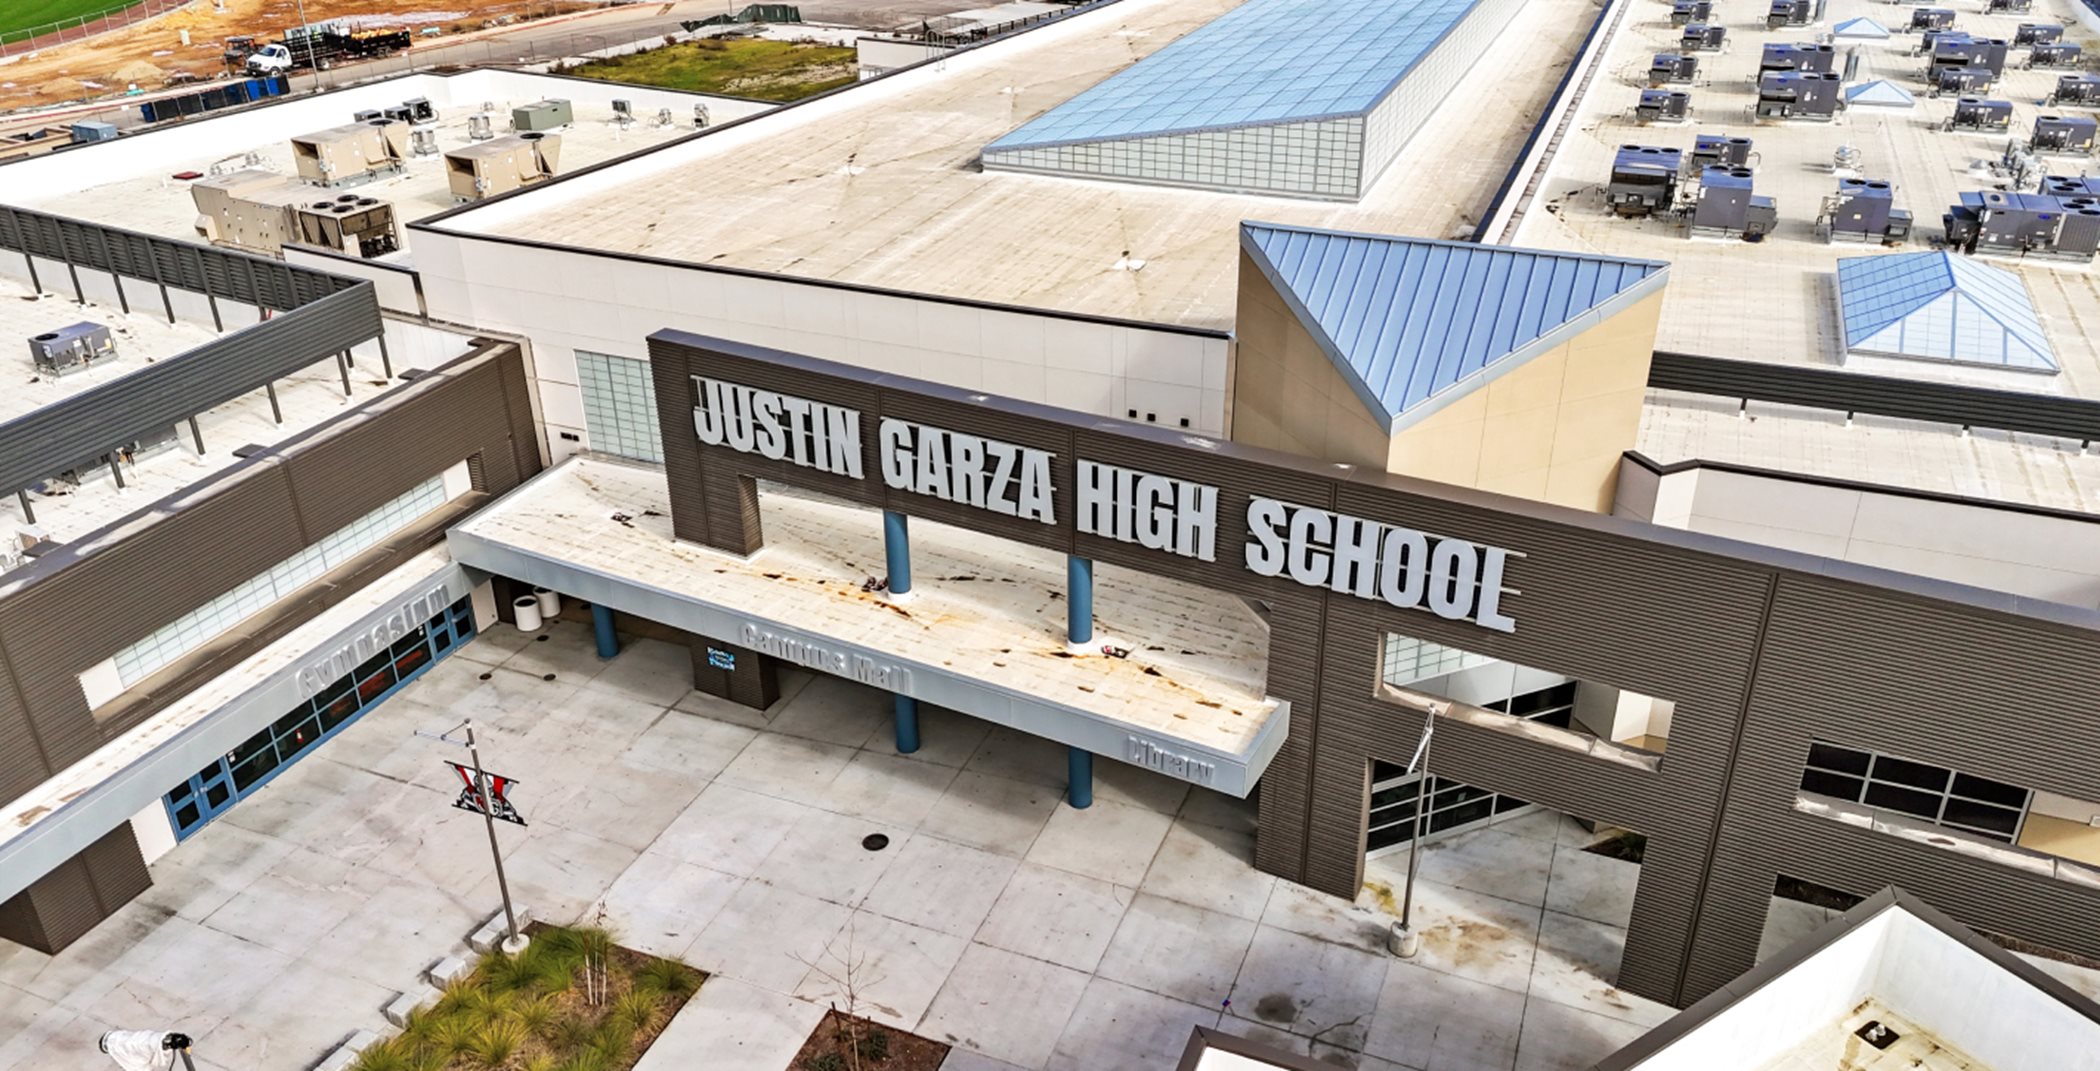 Justin Garza High School aerial view